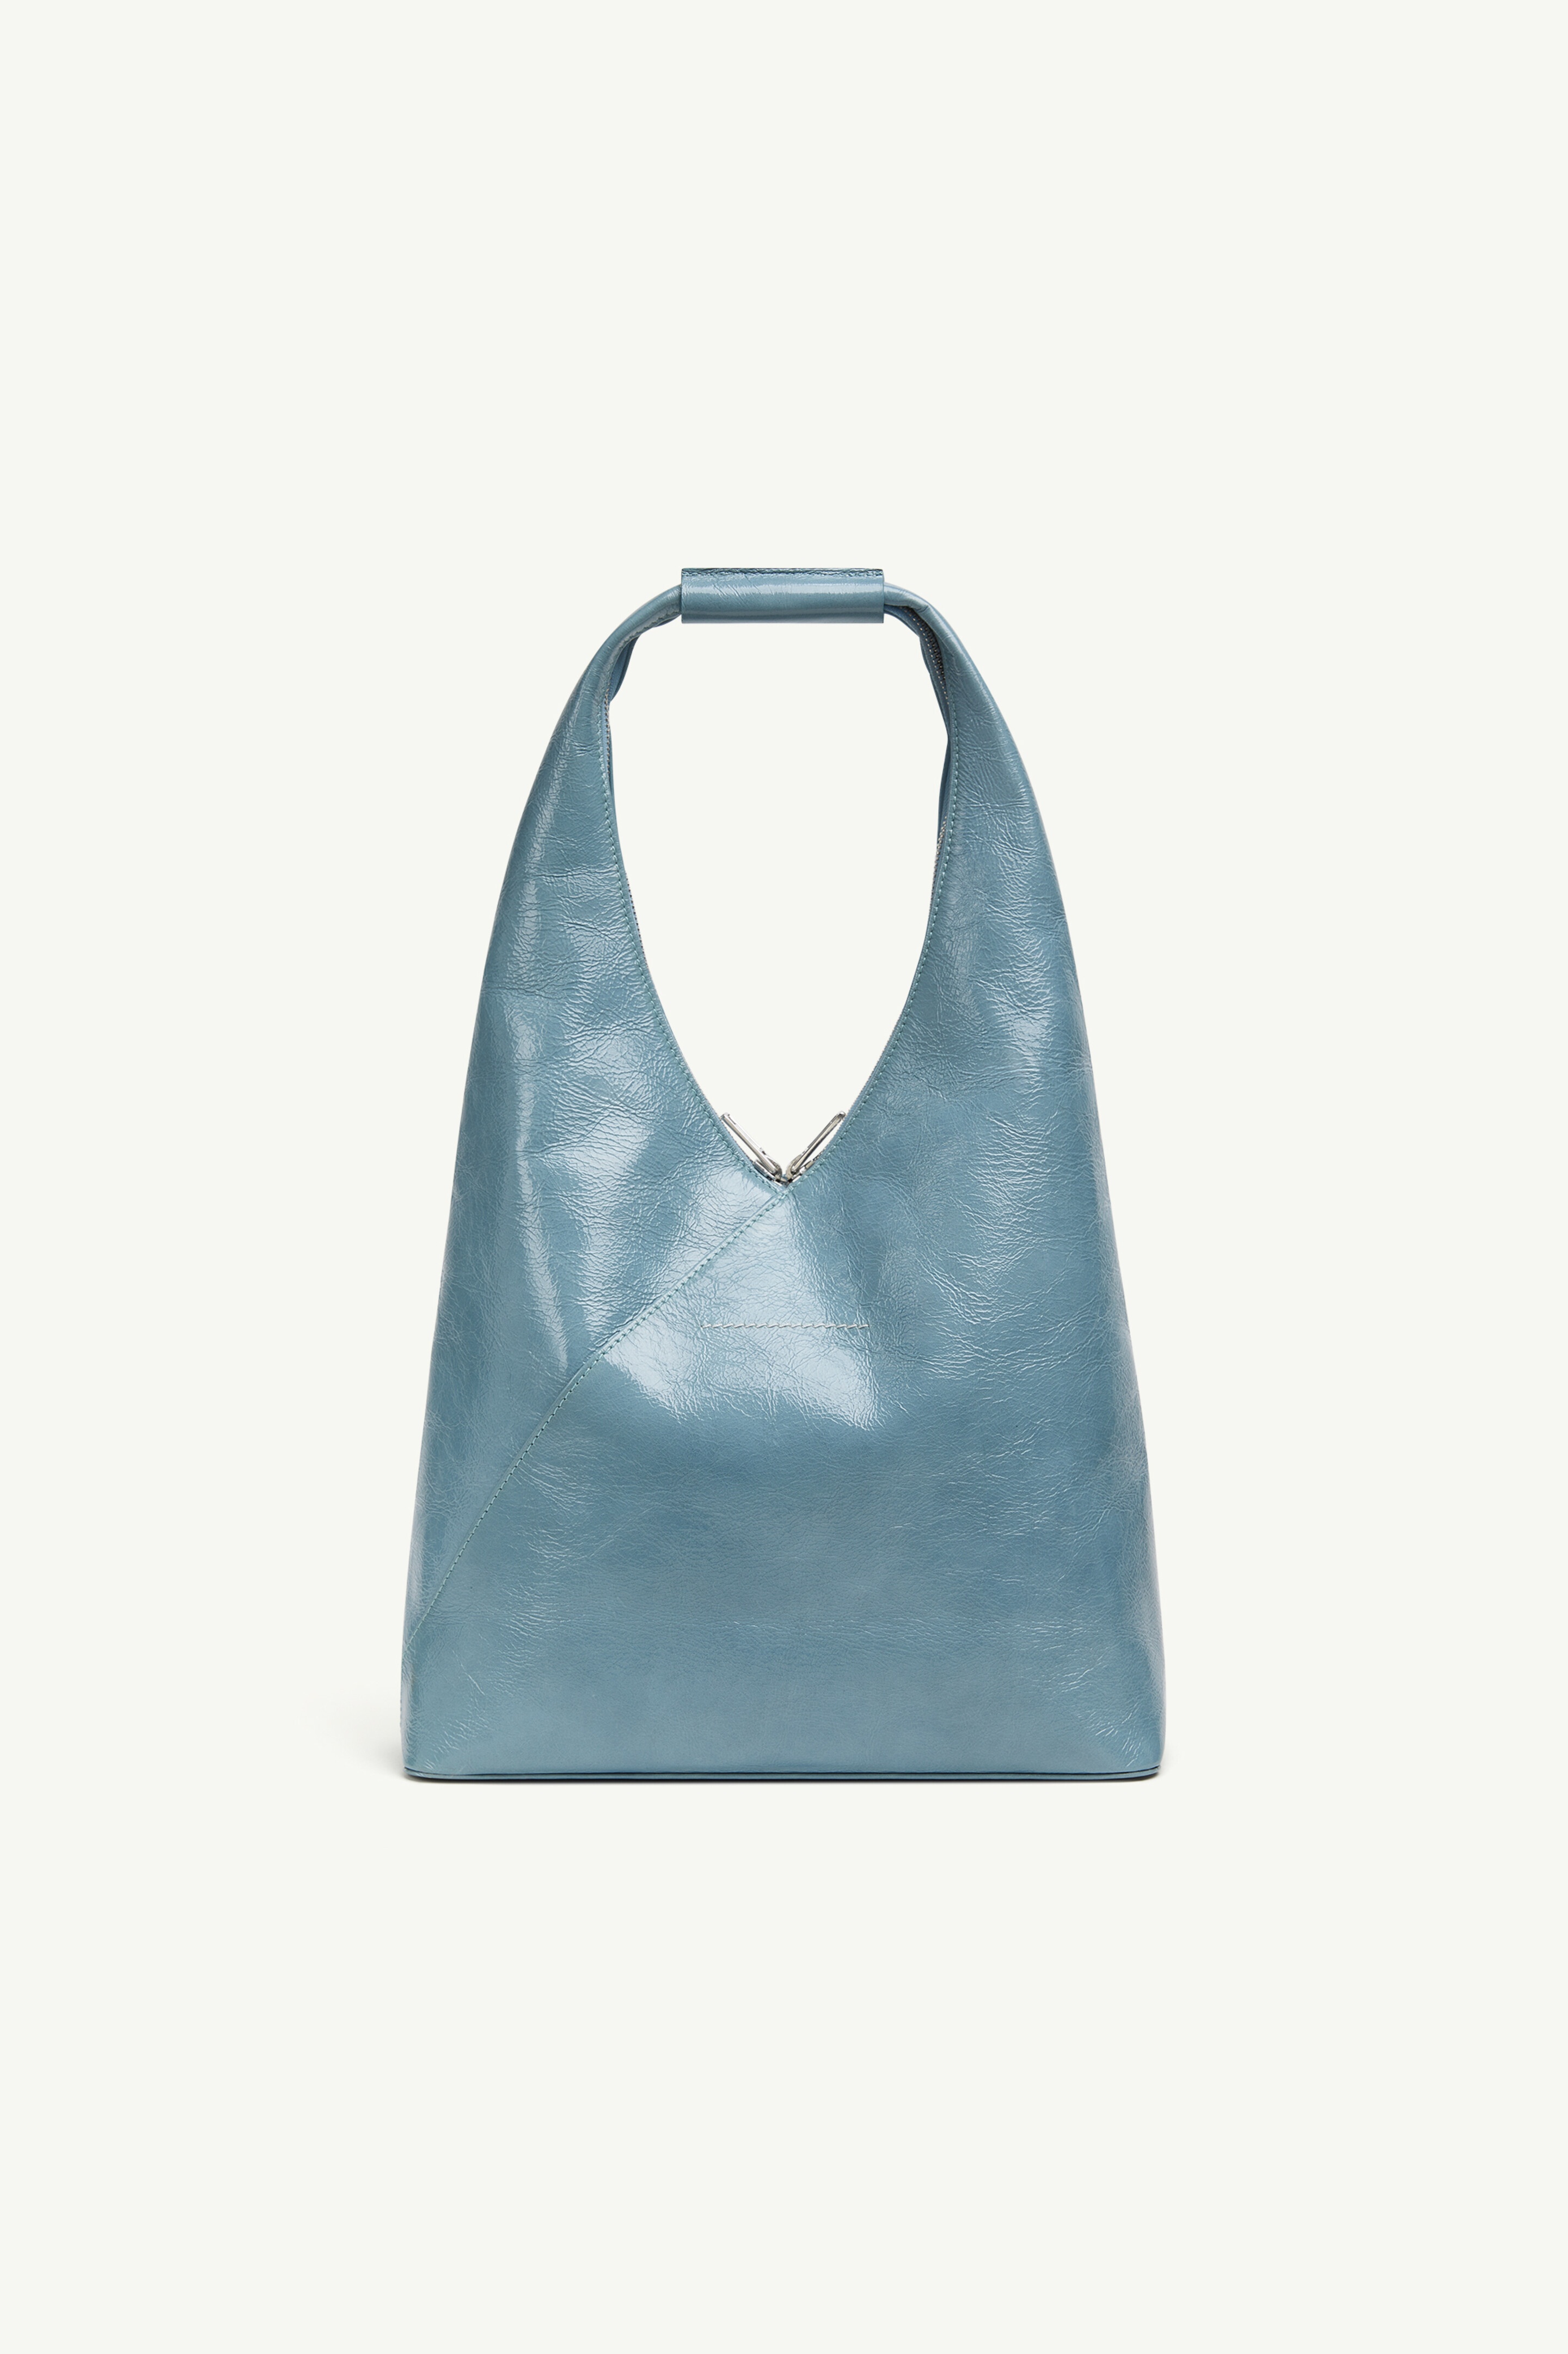 MM6 Maison Margiela Japanese bag with zip detail | REVERSIBLE